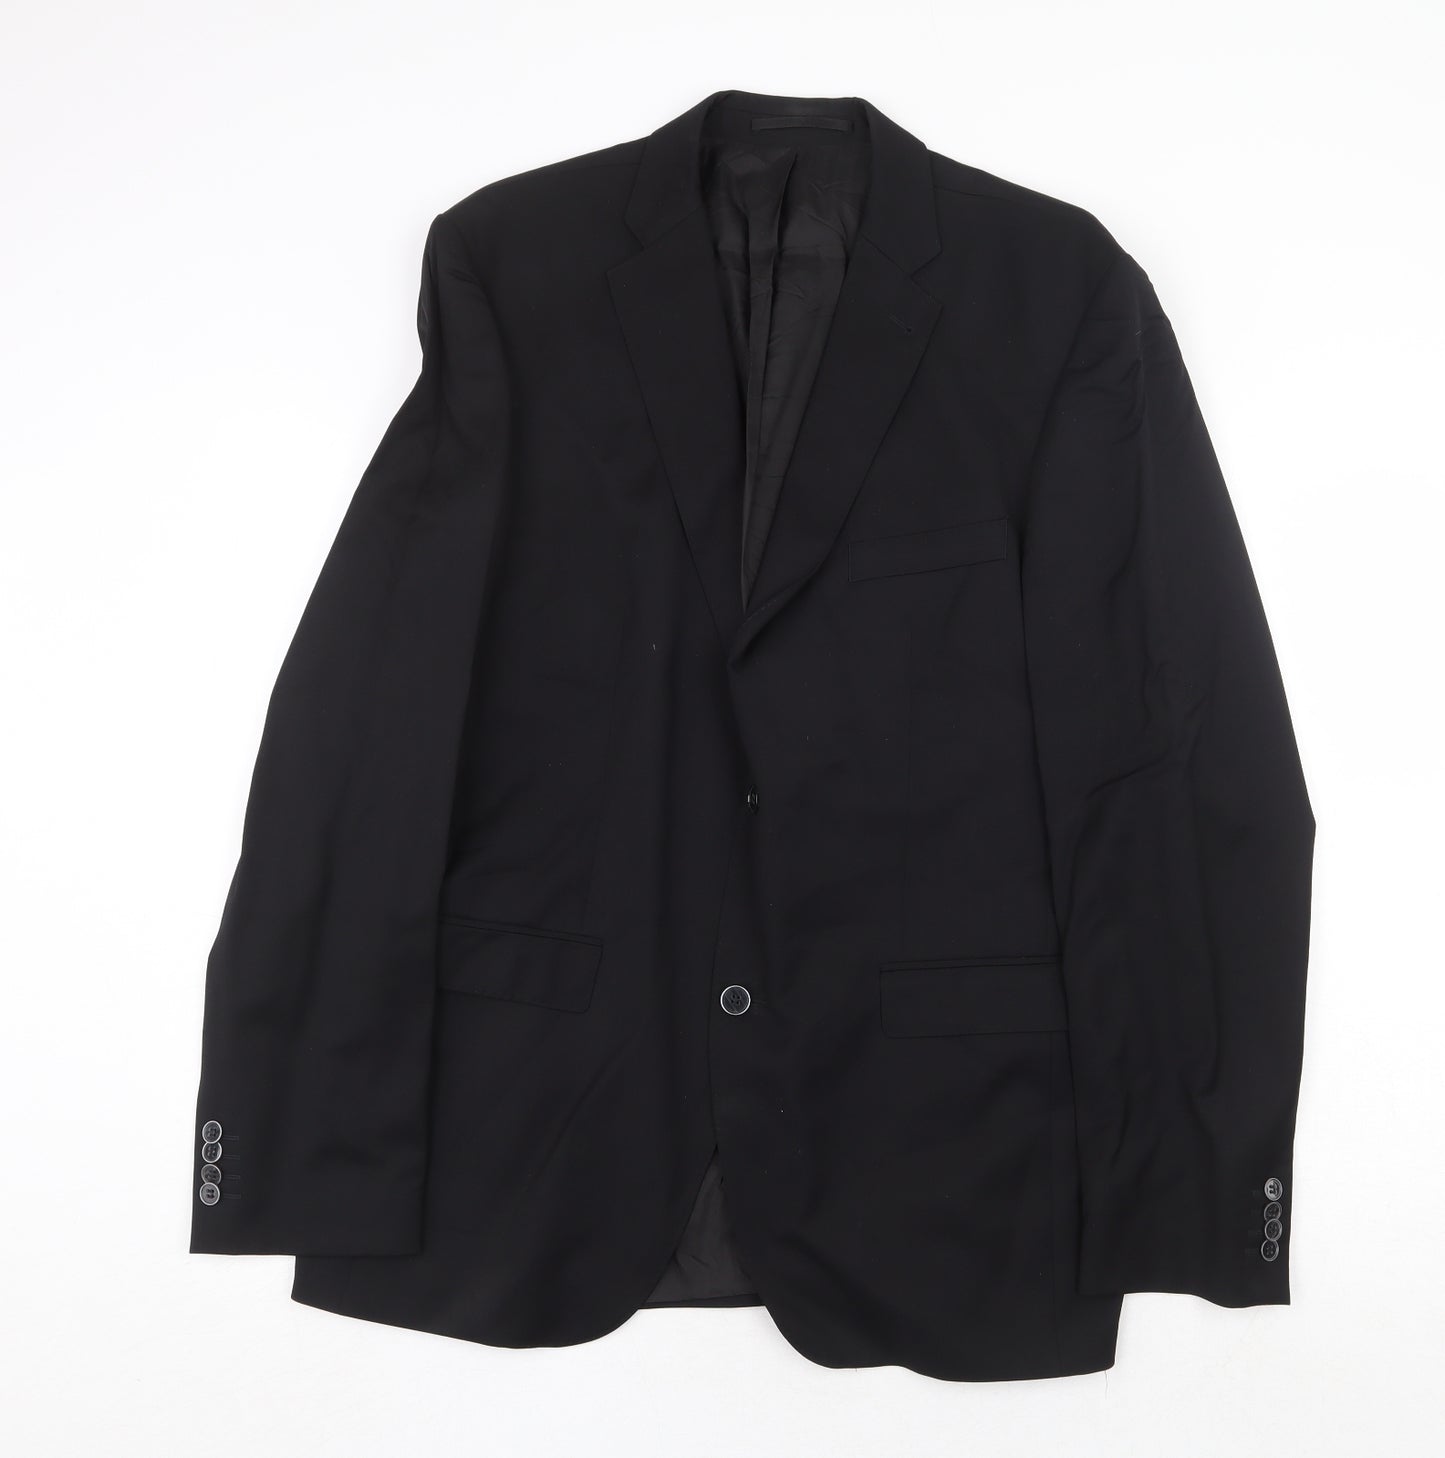 ROY ROBSON Mens Black Wool Jacket Suit Jacket Size 50 Regular